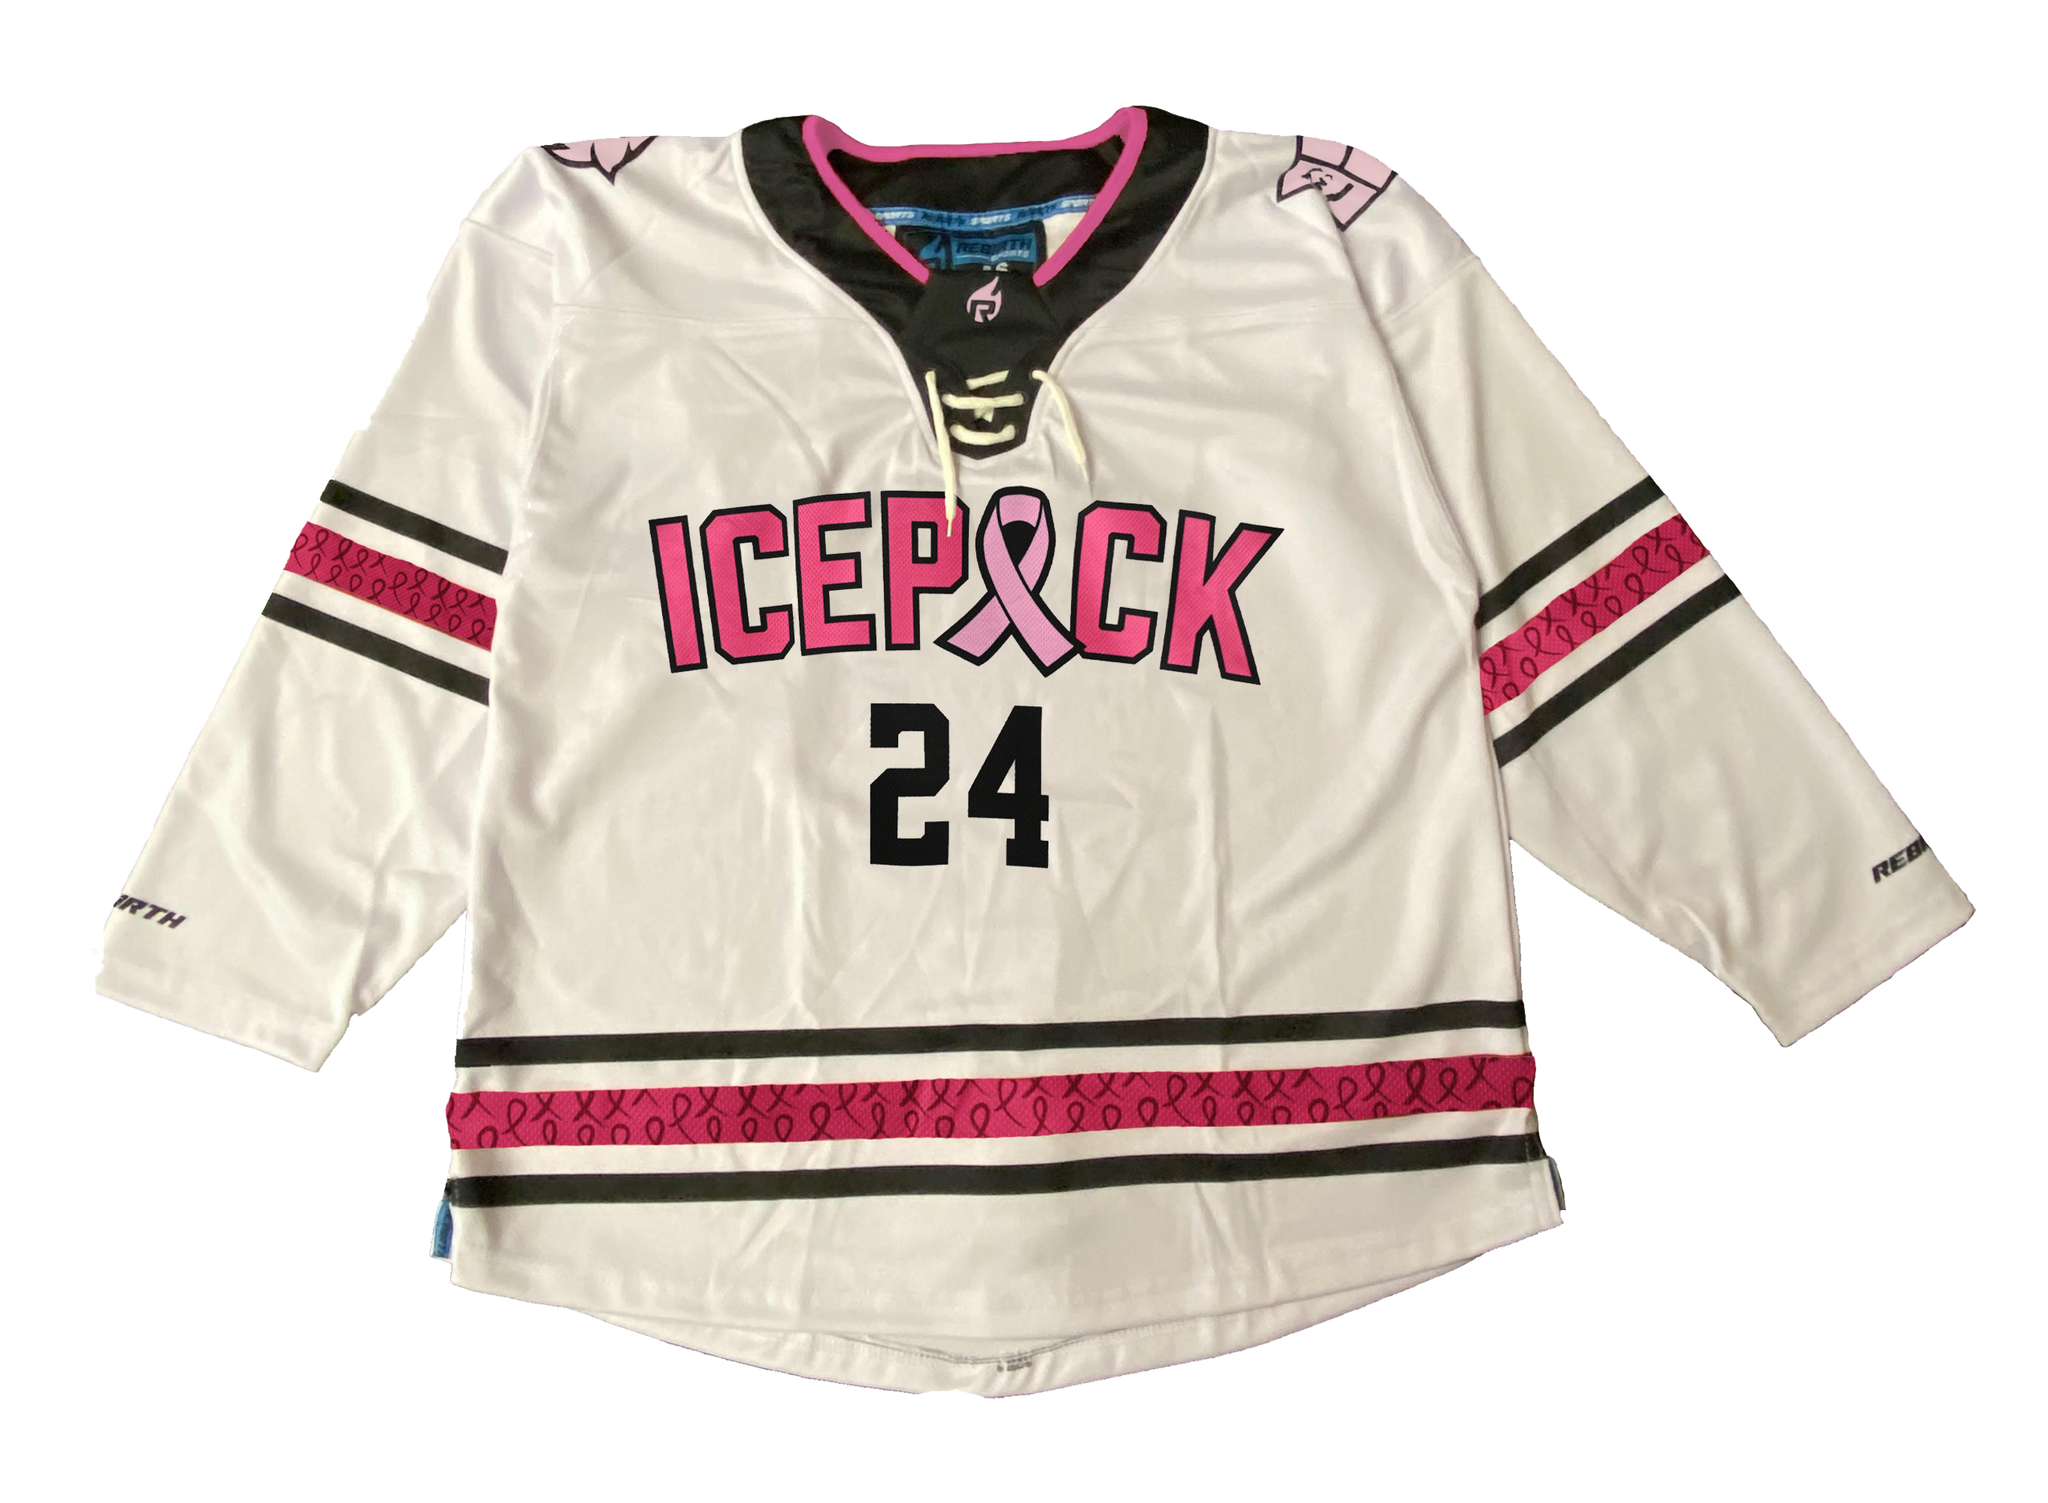 Icepack Hockey Breast Cancer Awareness Jersey